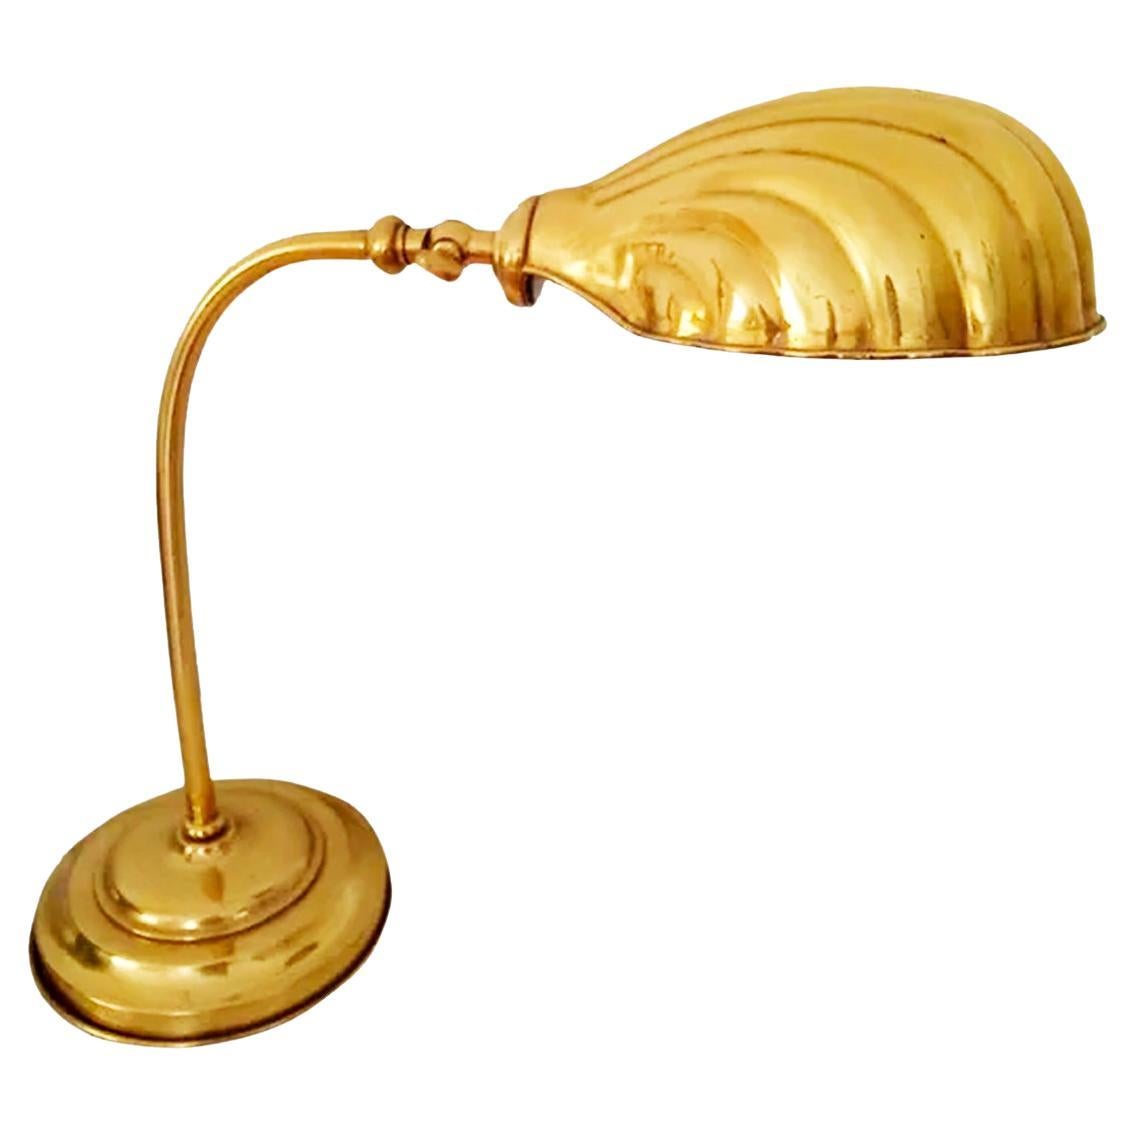   Desk or Table Lamp Shell Brass Gooseneck, Gold  Art Deco Style For Sale